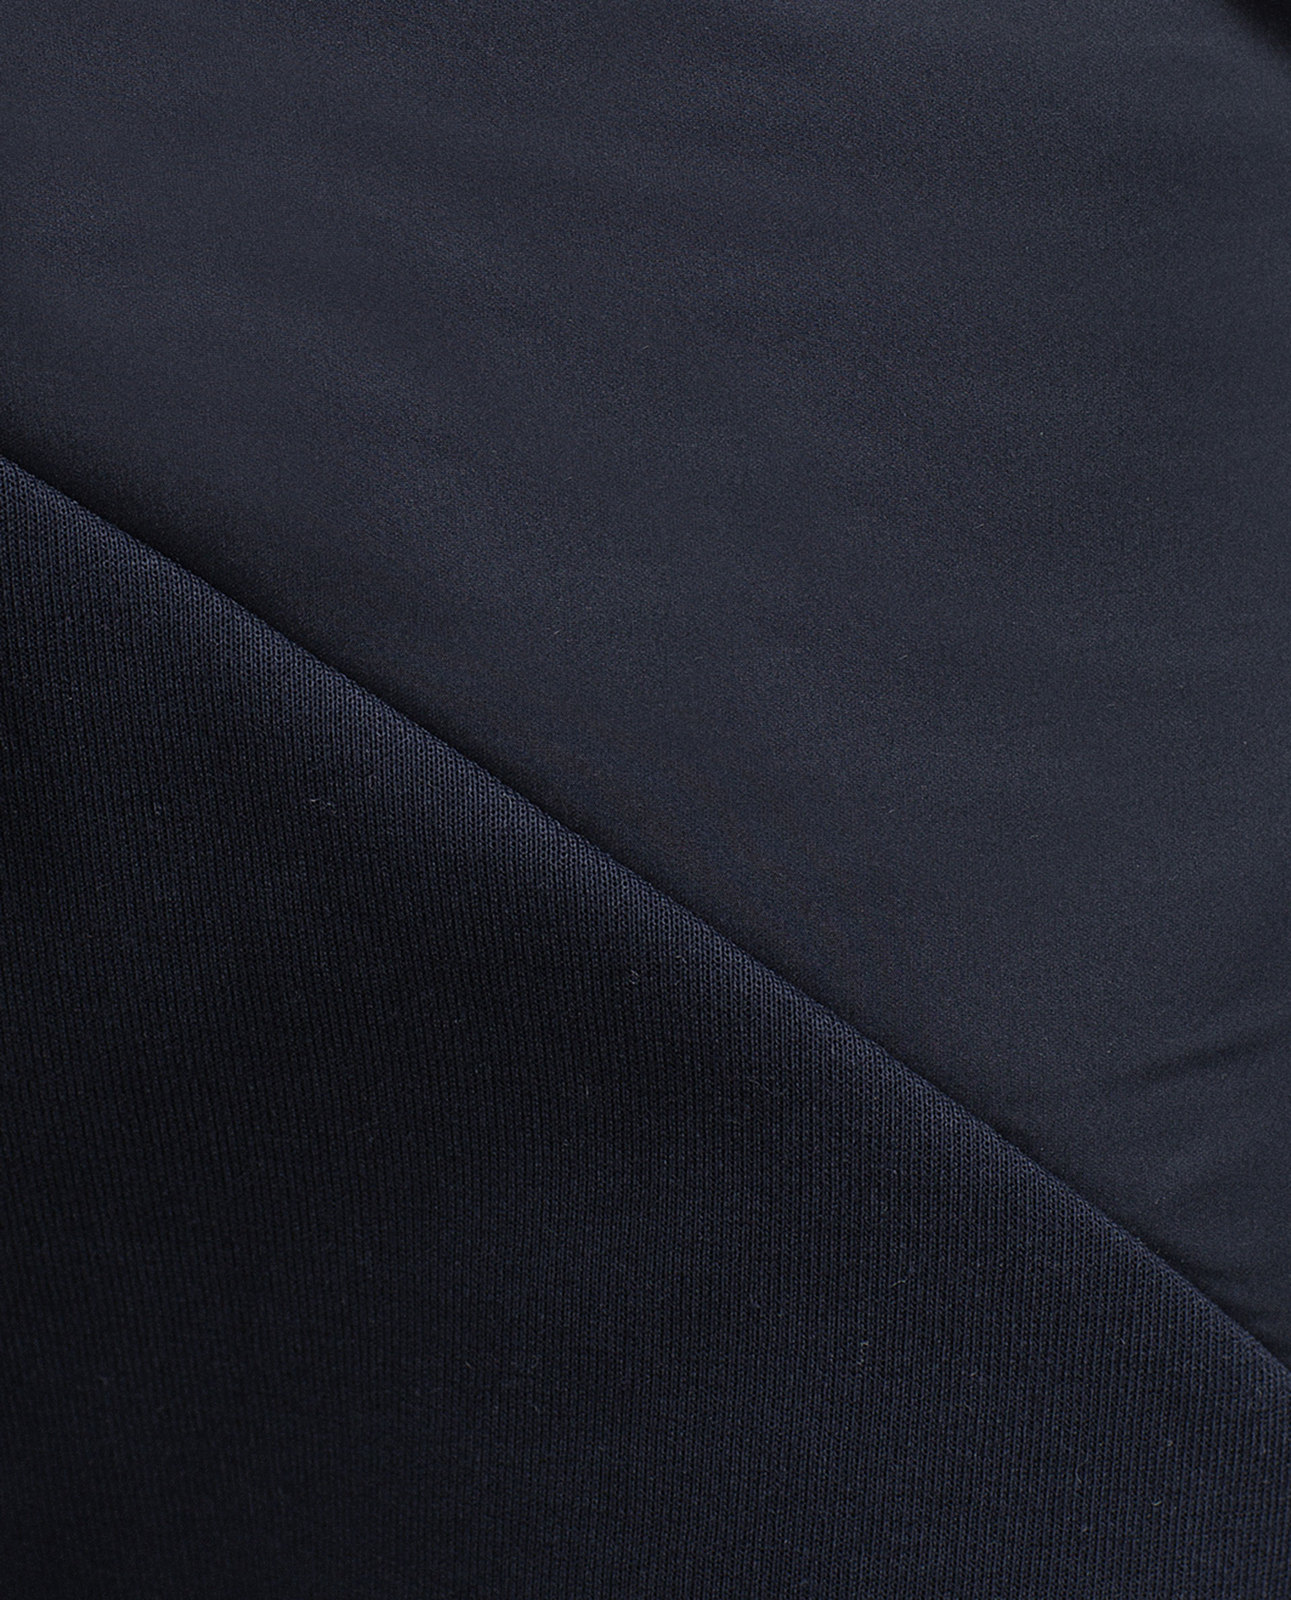 Zara férfi fekete melegítő nadrág 2015.10.16 #89621 fotója